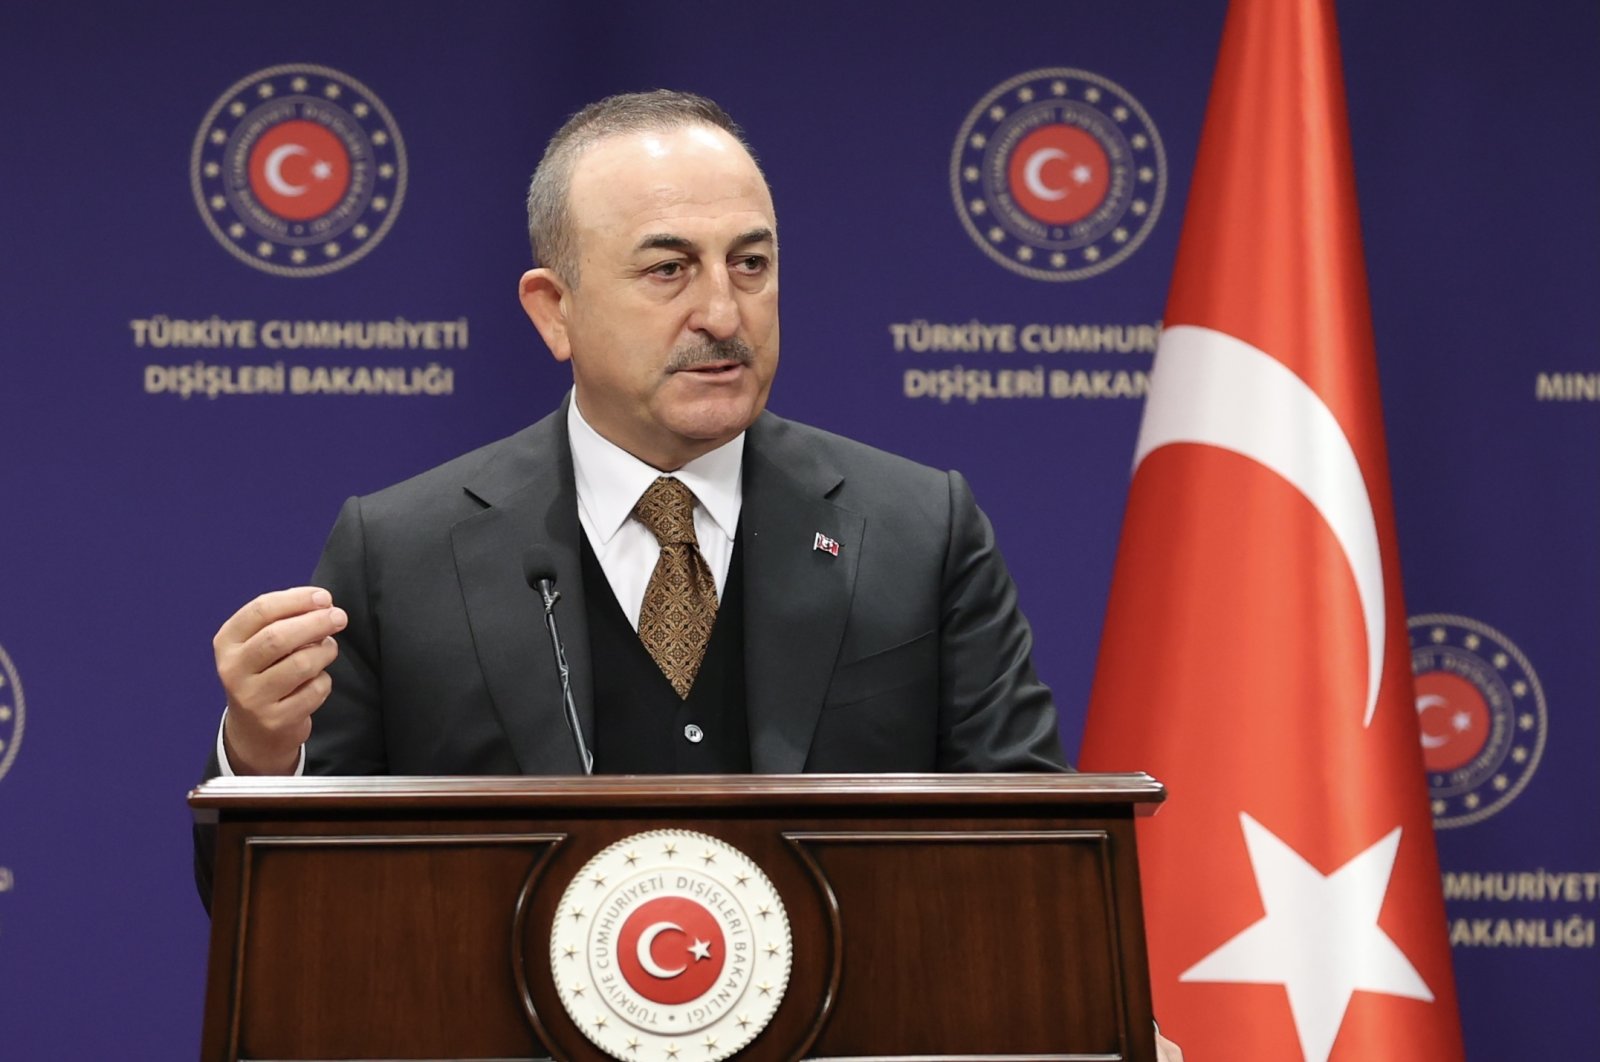 FM Armenia, utusan kemungkinan akan menghadiri Forum Diplomasi Antalya: avuşoğlu